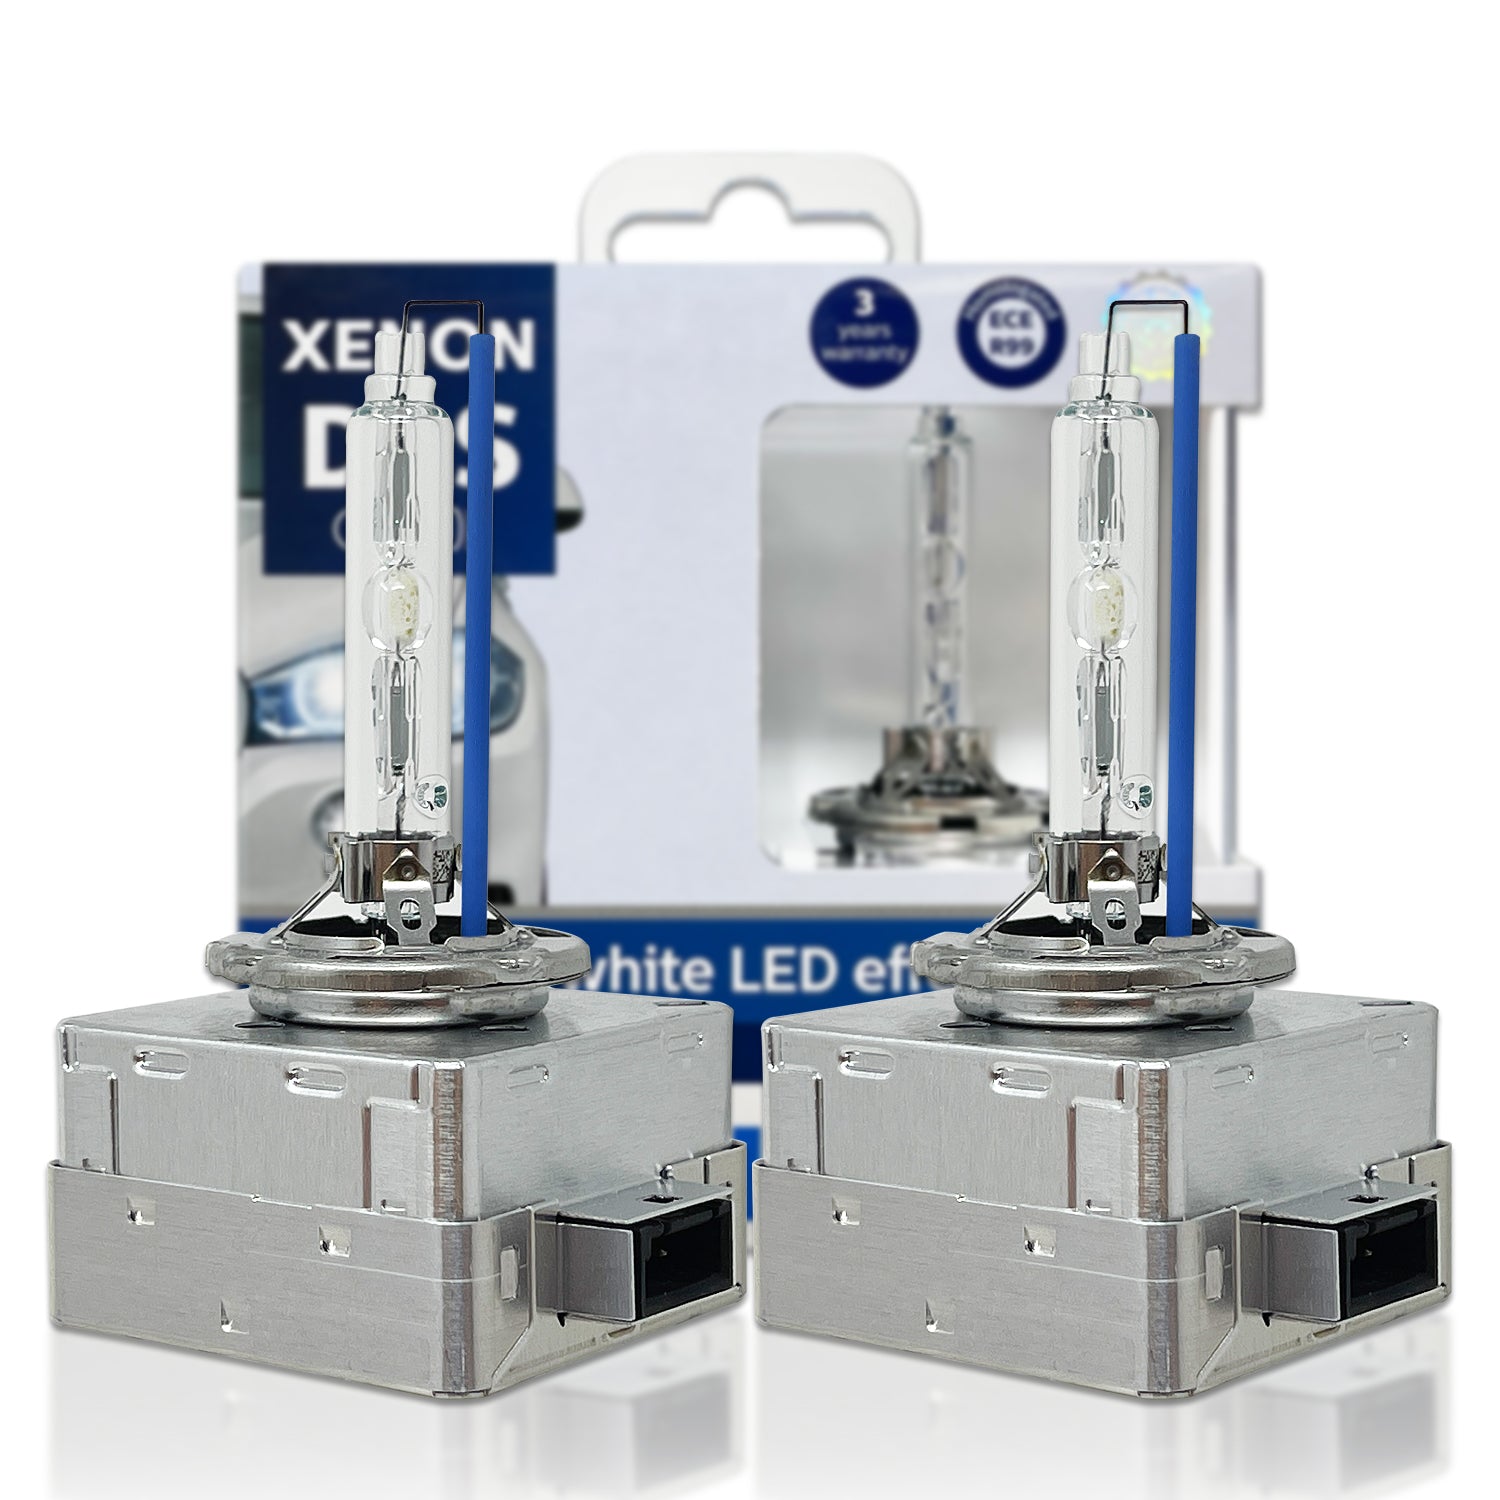 D3S LEDs - NEW deNX Gen D3S LEDs that compete with D3S Xenon